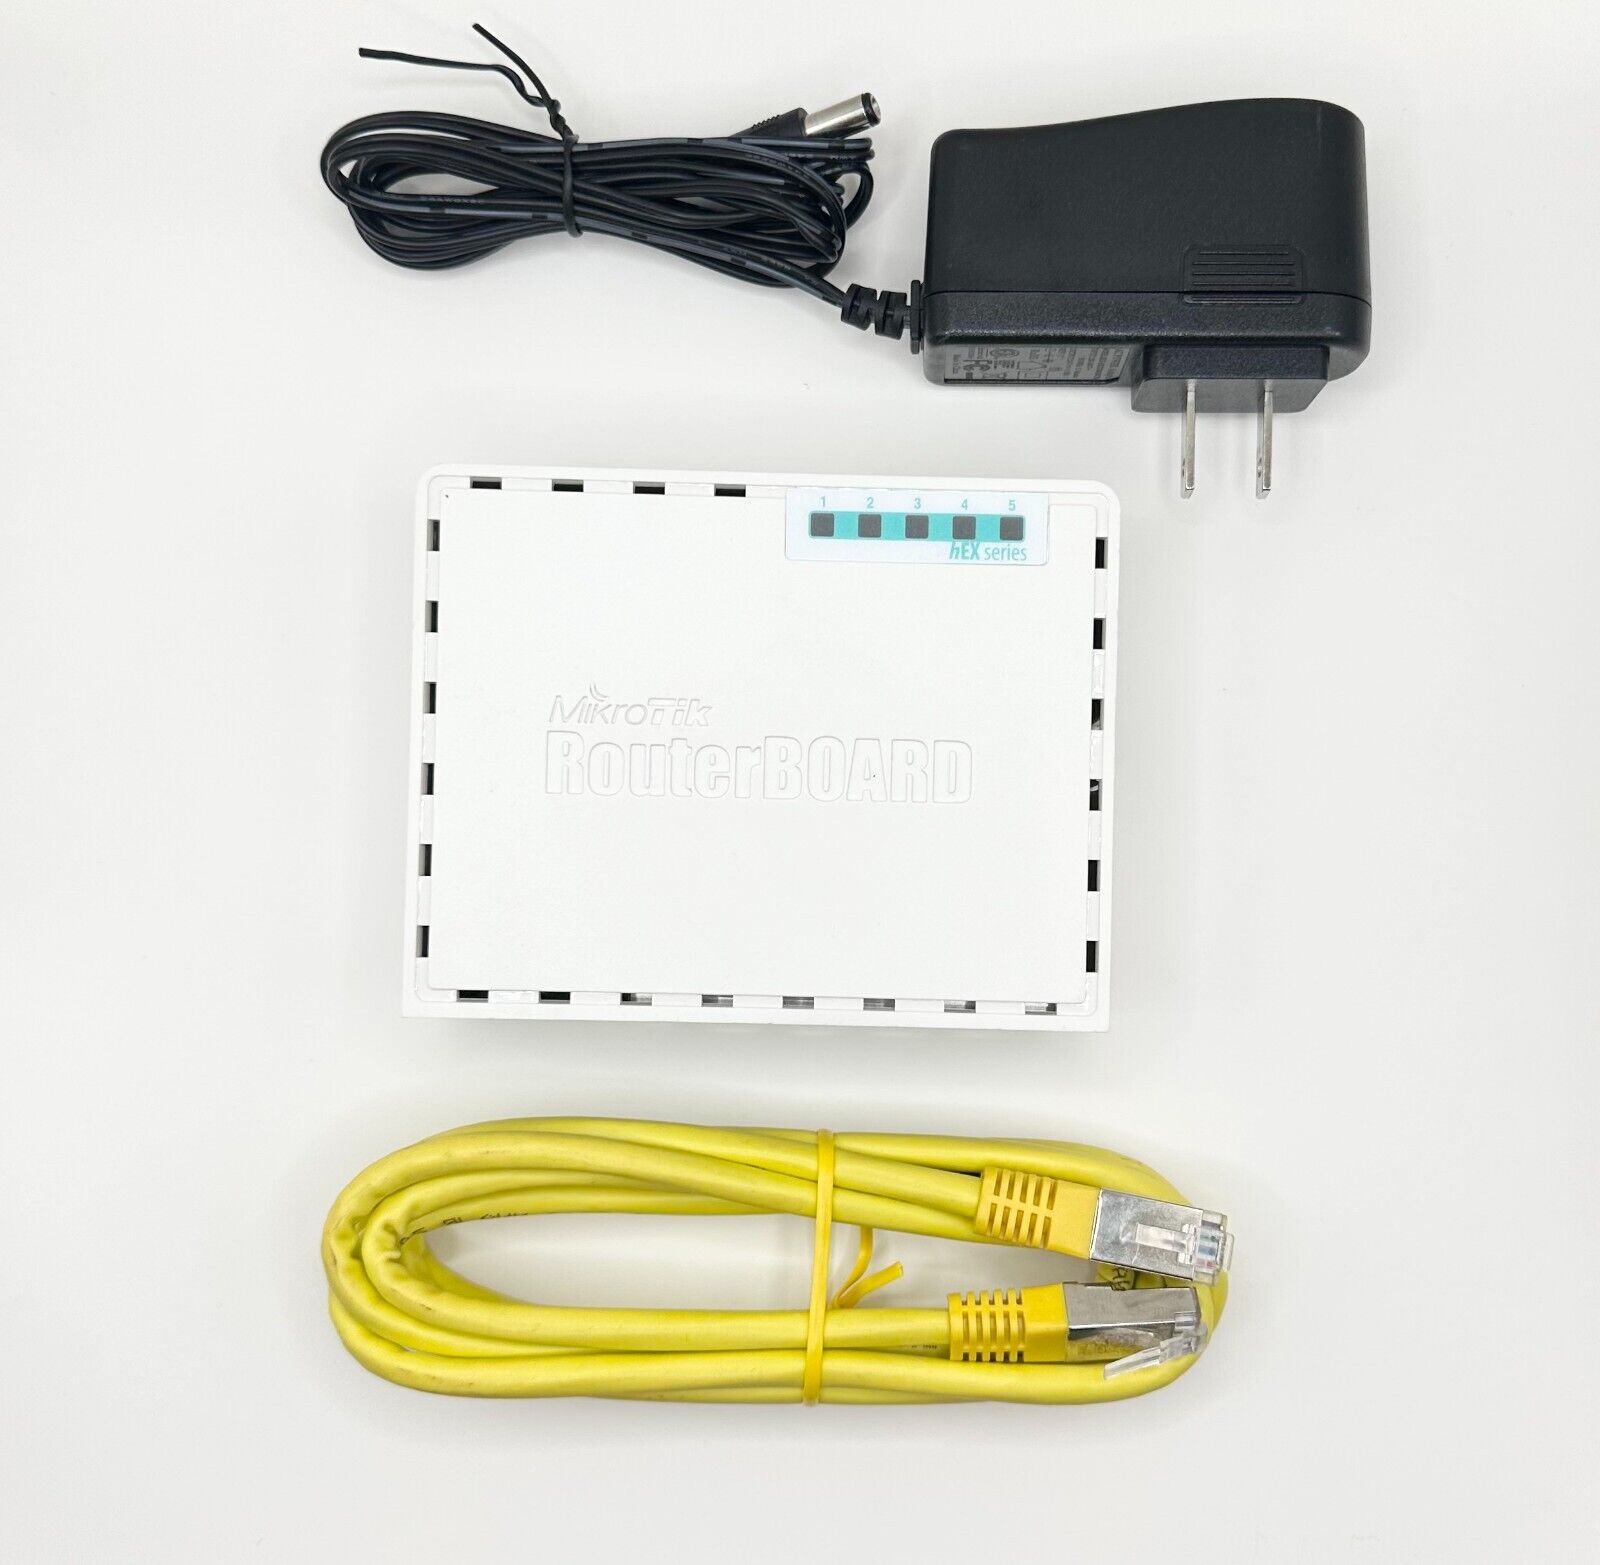 Mikrotik hEX RB750Gr3 5-port Ethernet Gigabit Router RouterBOARD hEX